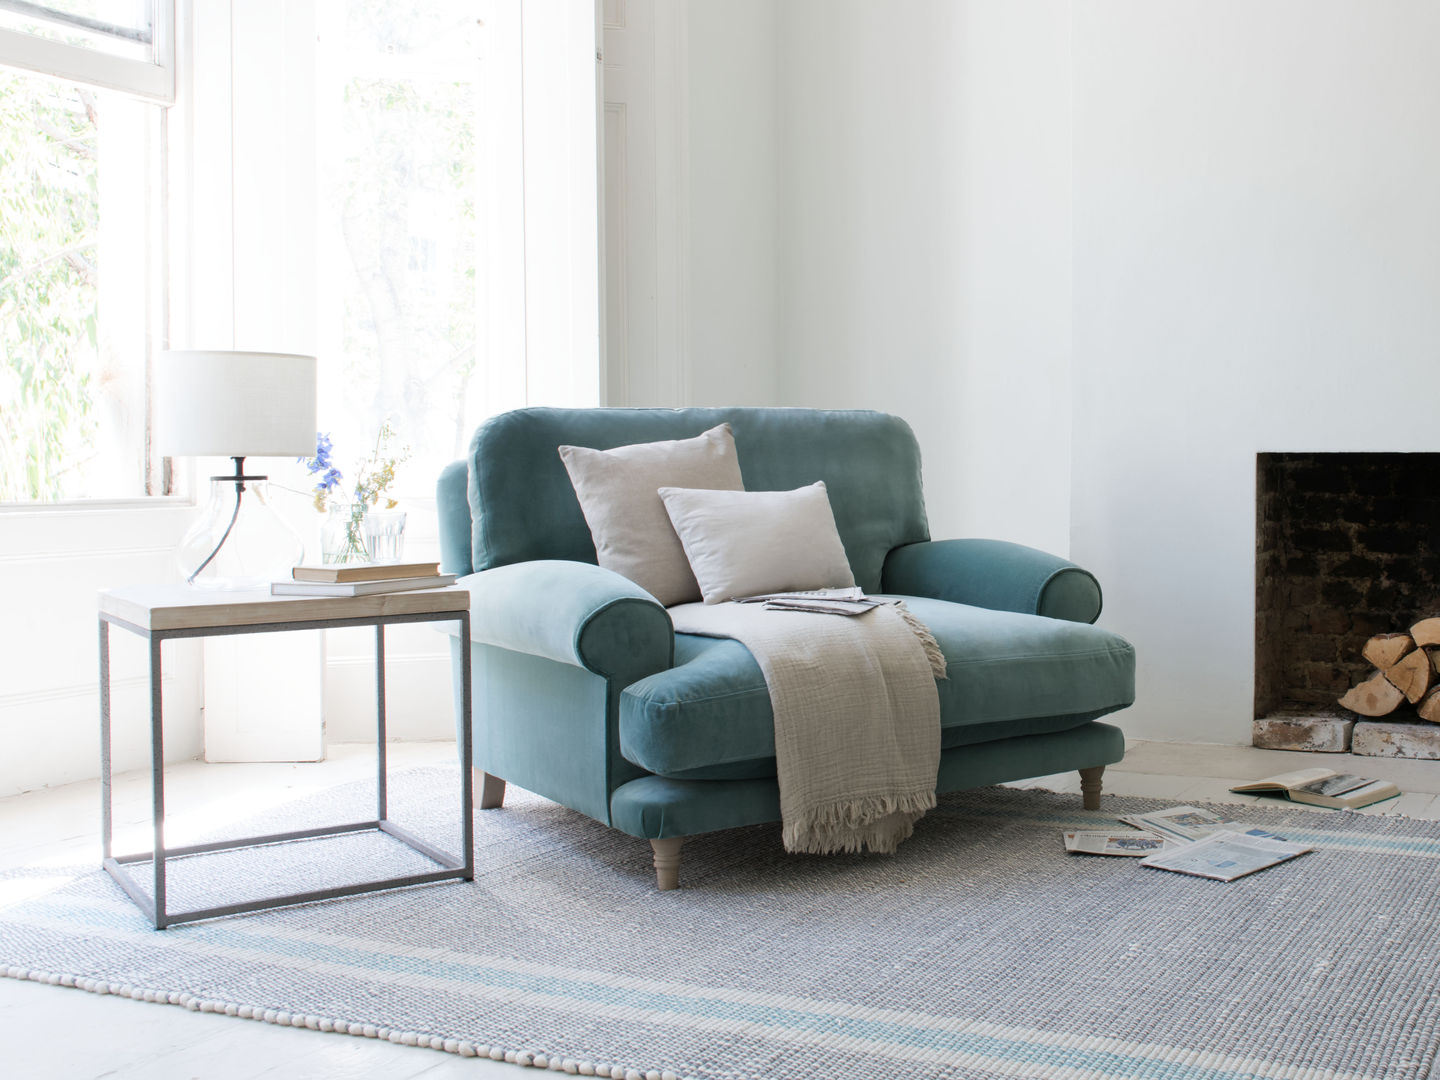 Slowcoach love seat Loaf Salones de estilo moderno armchair,teal,green,sea blue,velvet,love seat,living room,sofa